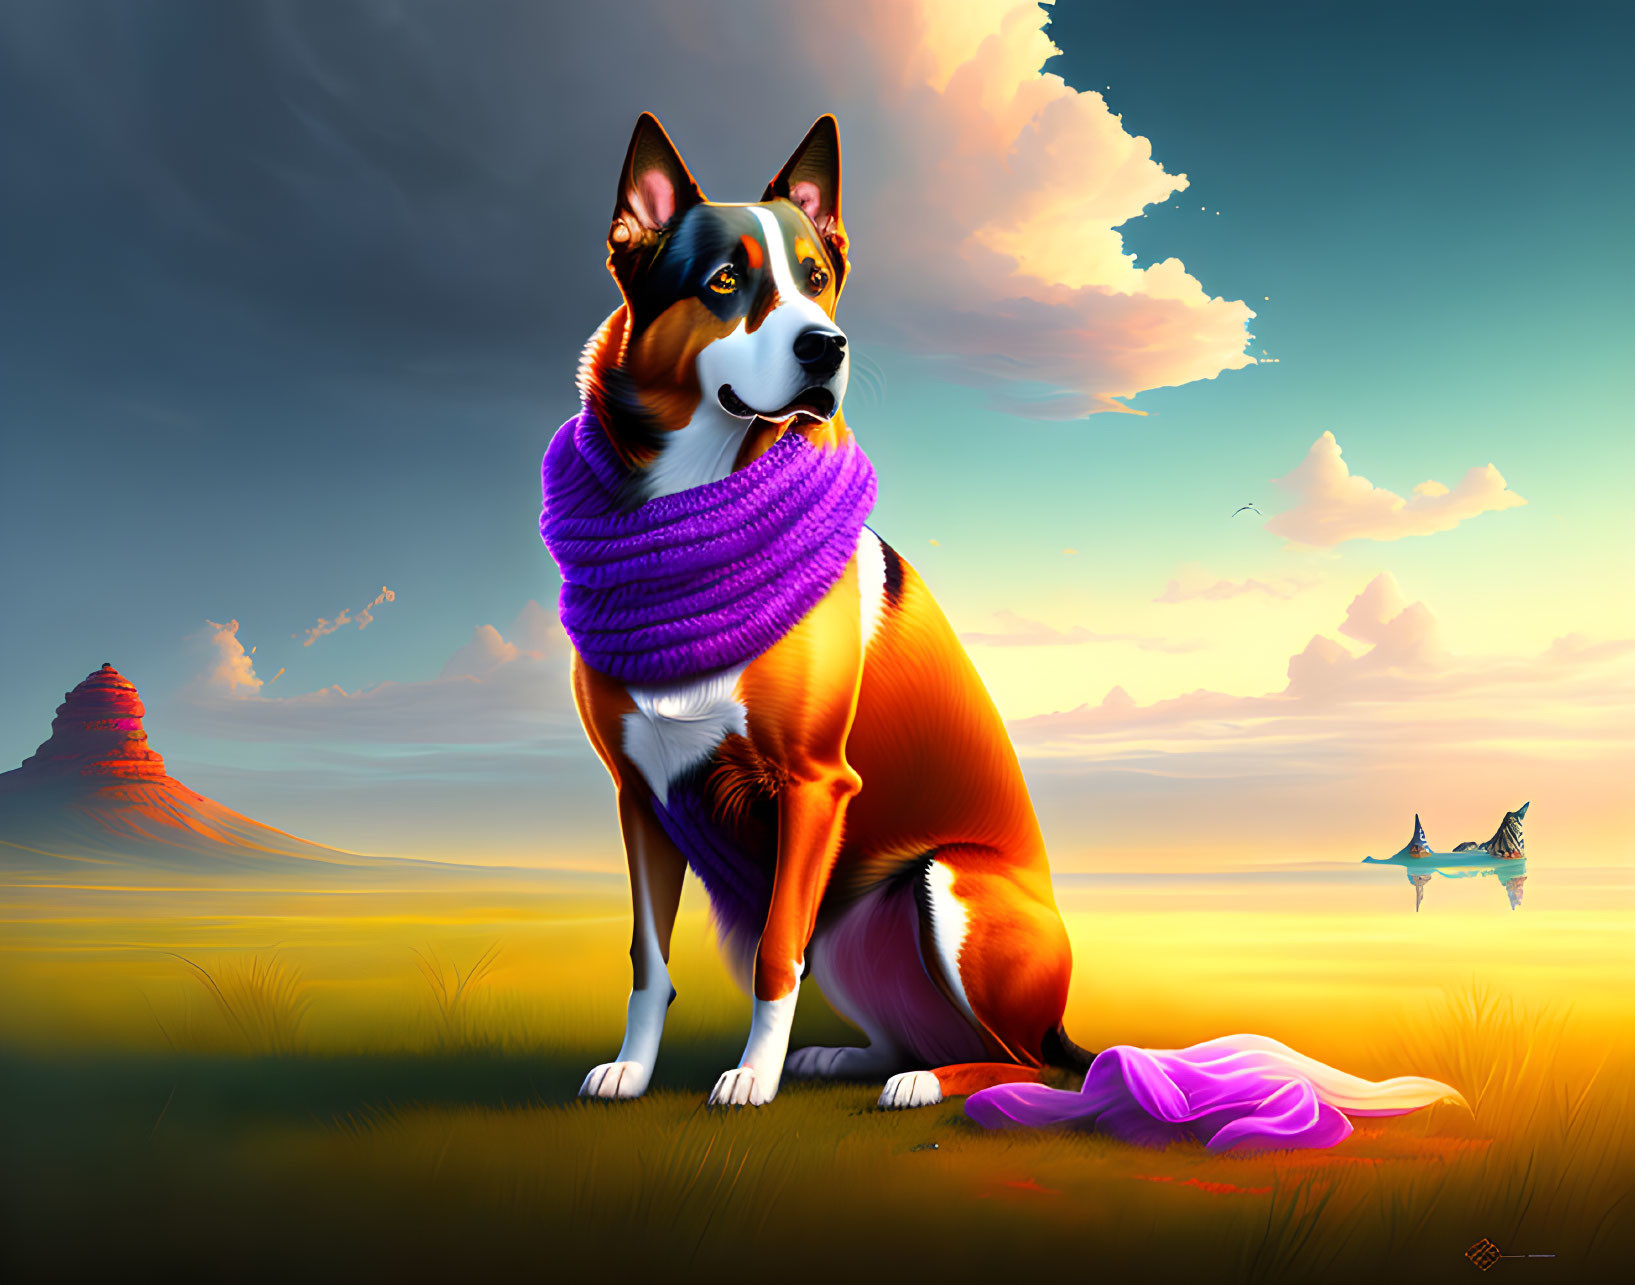 Digital illustration: Dog in purple scarf in serene sunset scene